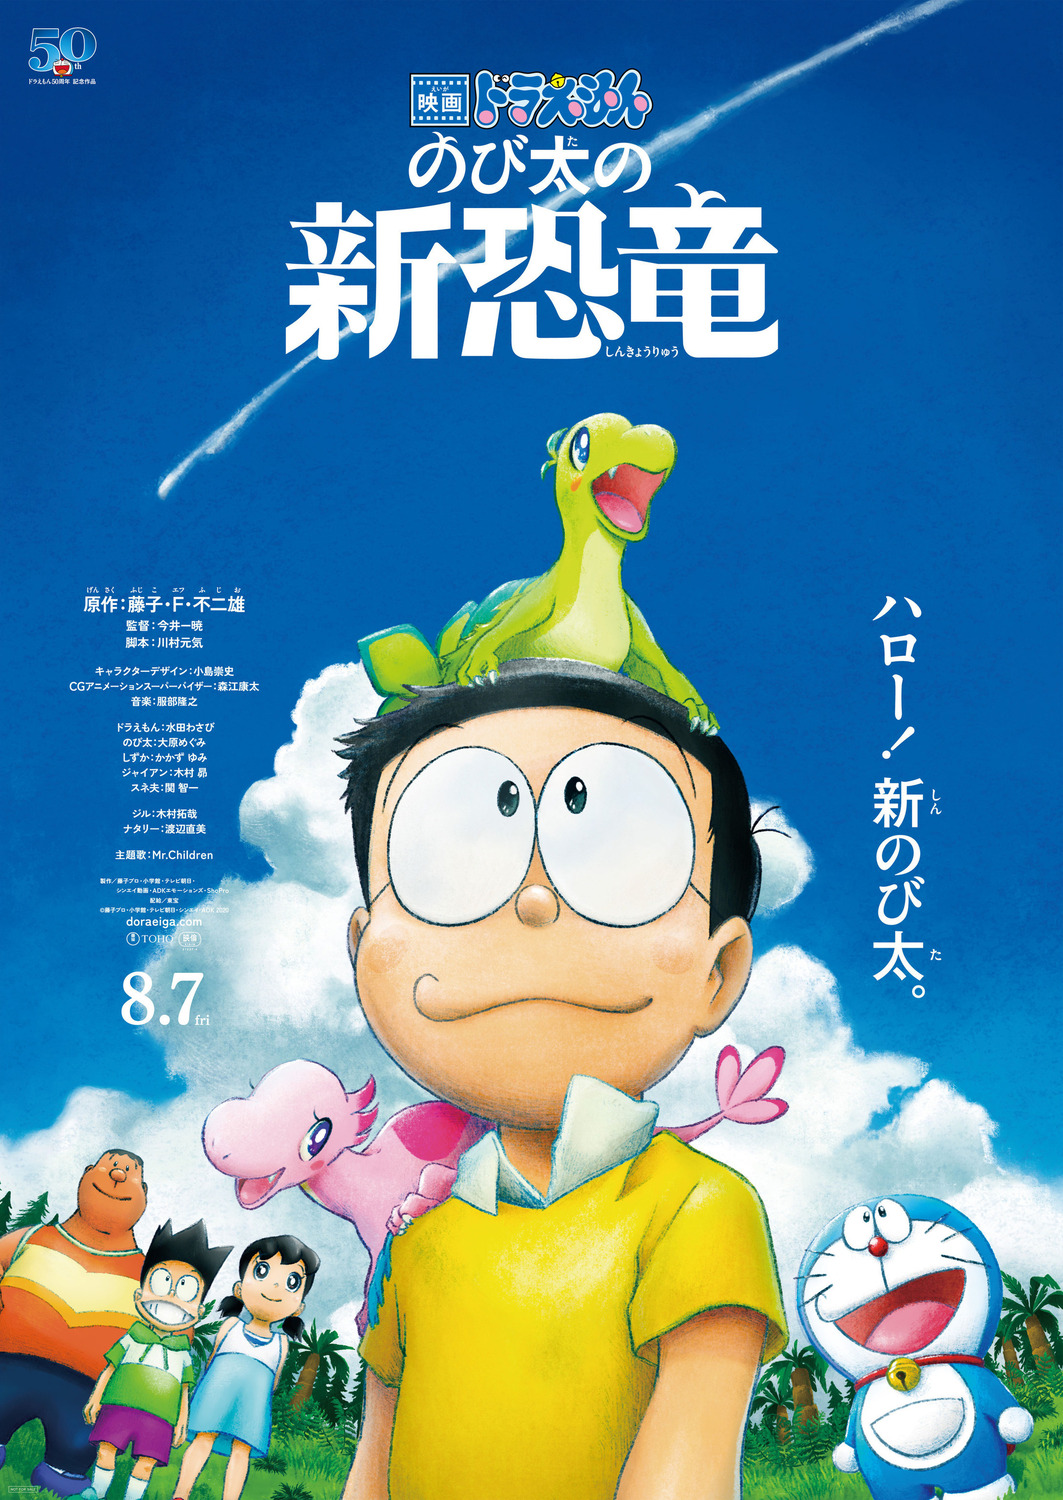 Extra Large Movie Poster Image for Eiga Doraemon: Nobita no shin kyôryû 